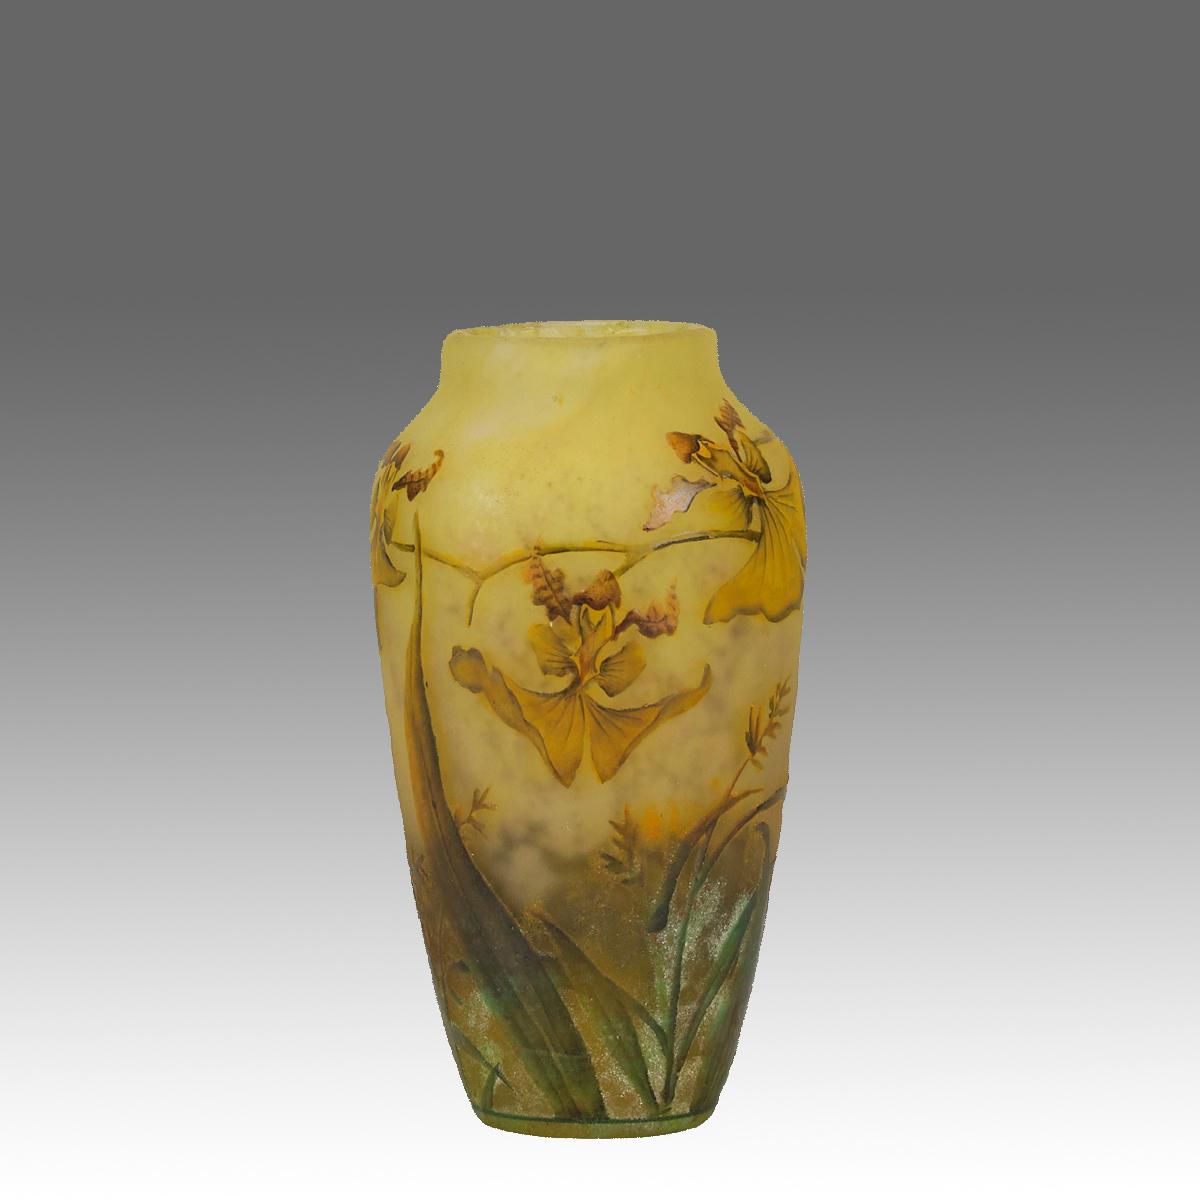 Early 20th Century Art Nouveau "Wild Orchid Vase" by Daum Frères